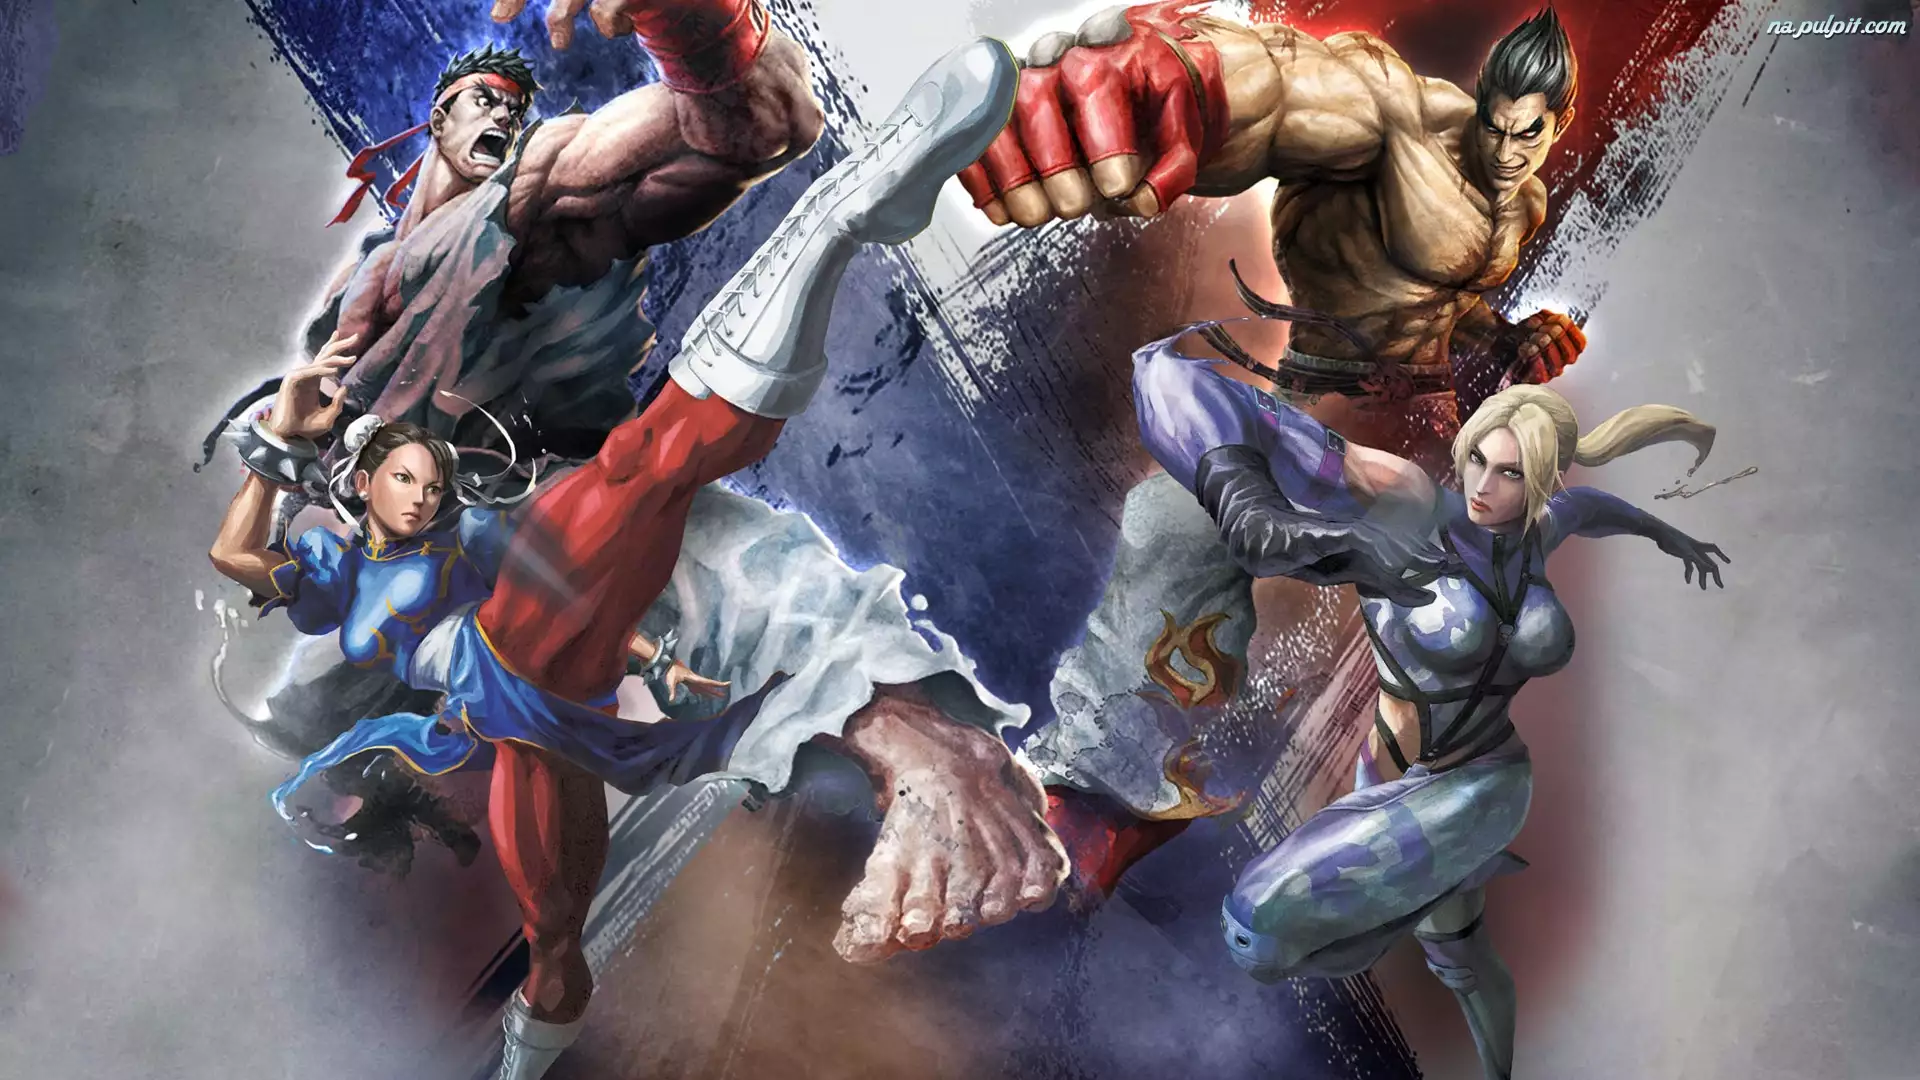 Chun-Li, Kazuya Mishima, Ryu, Street Fighter X Tekken, Nina Williams